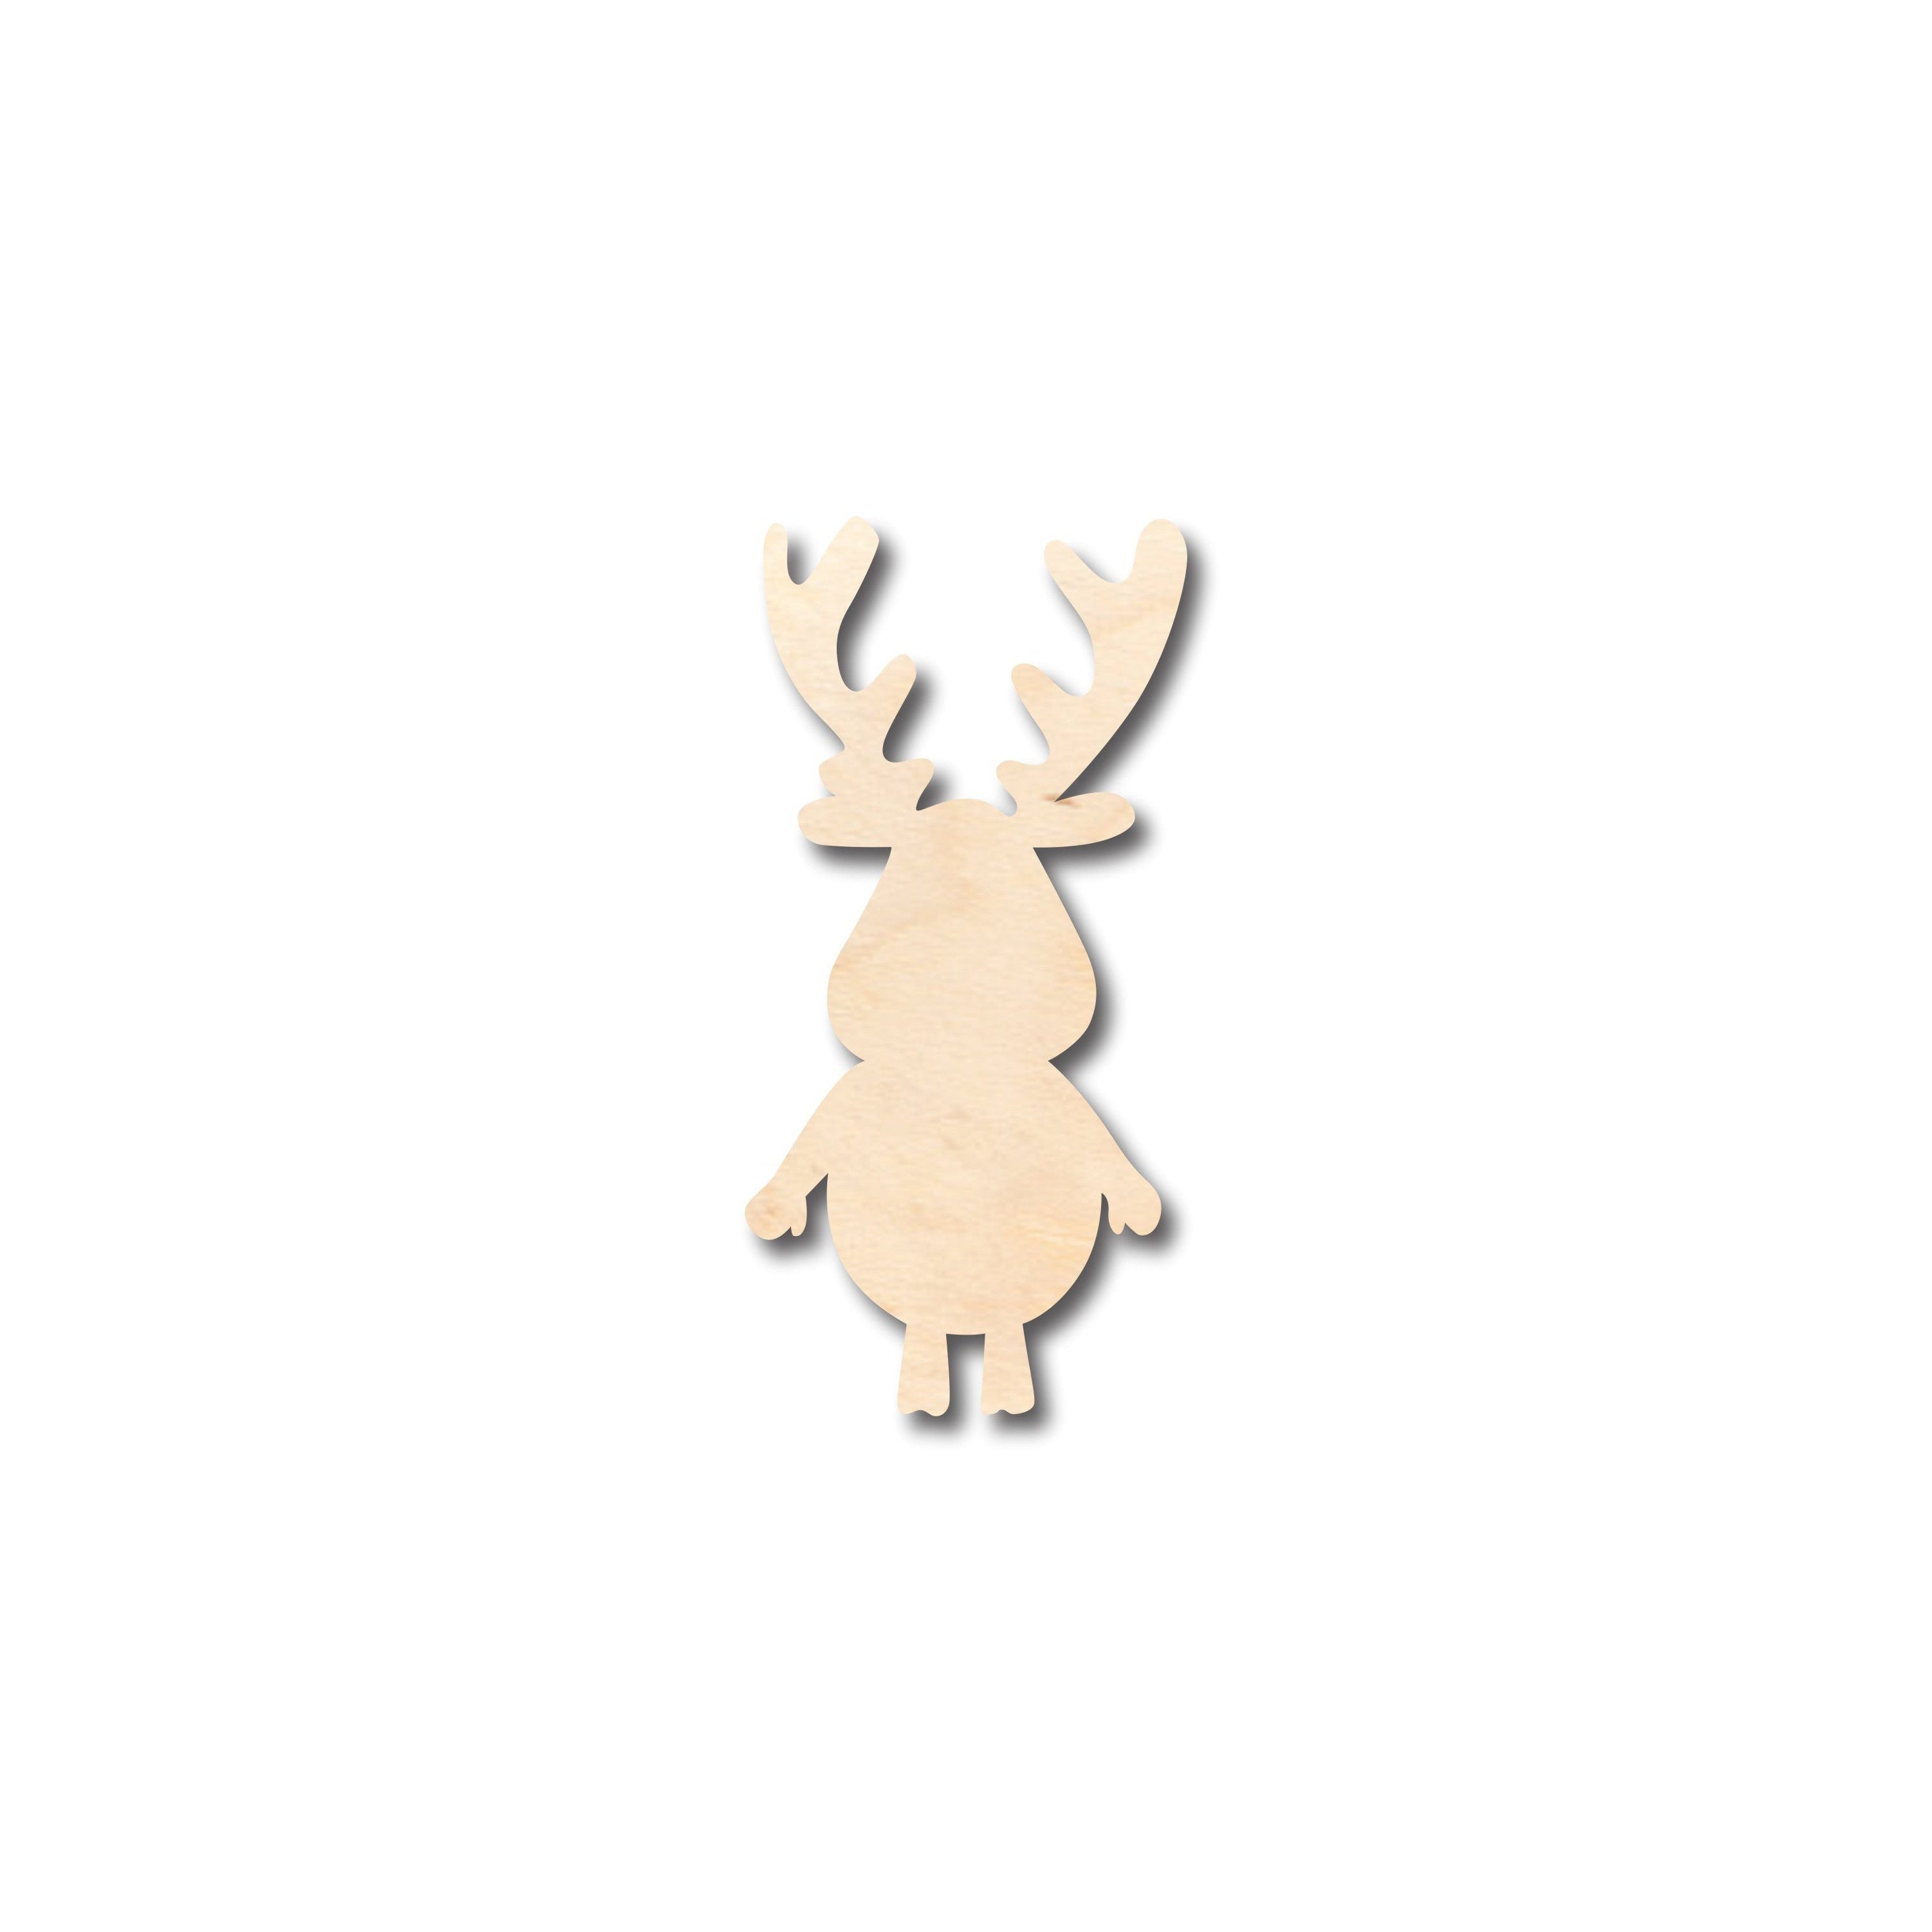 Unfinished Wood Cartoon Deer Moose Shape - Craft - up to 36